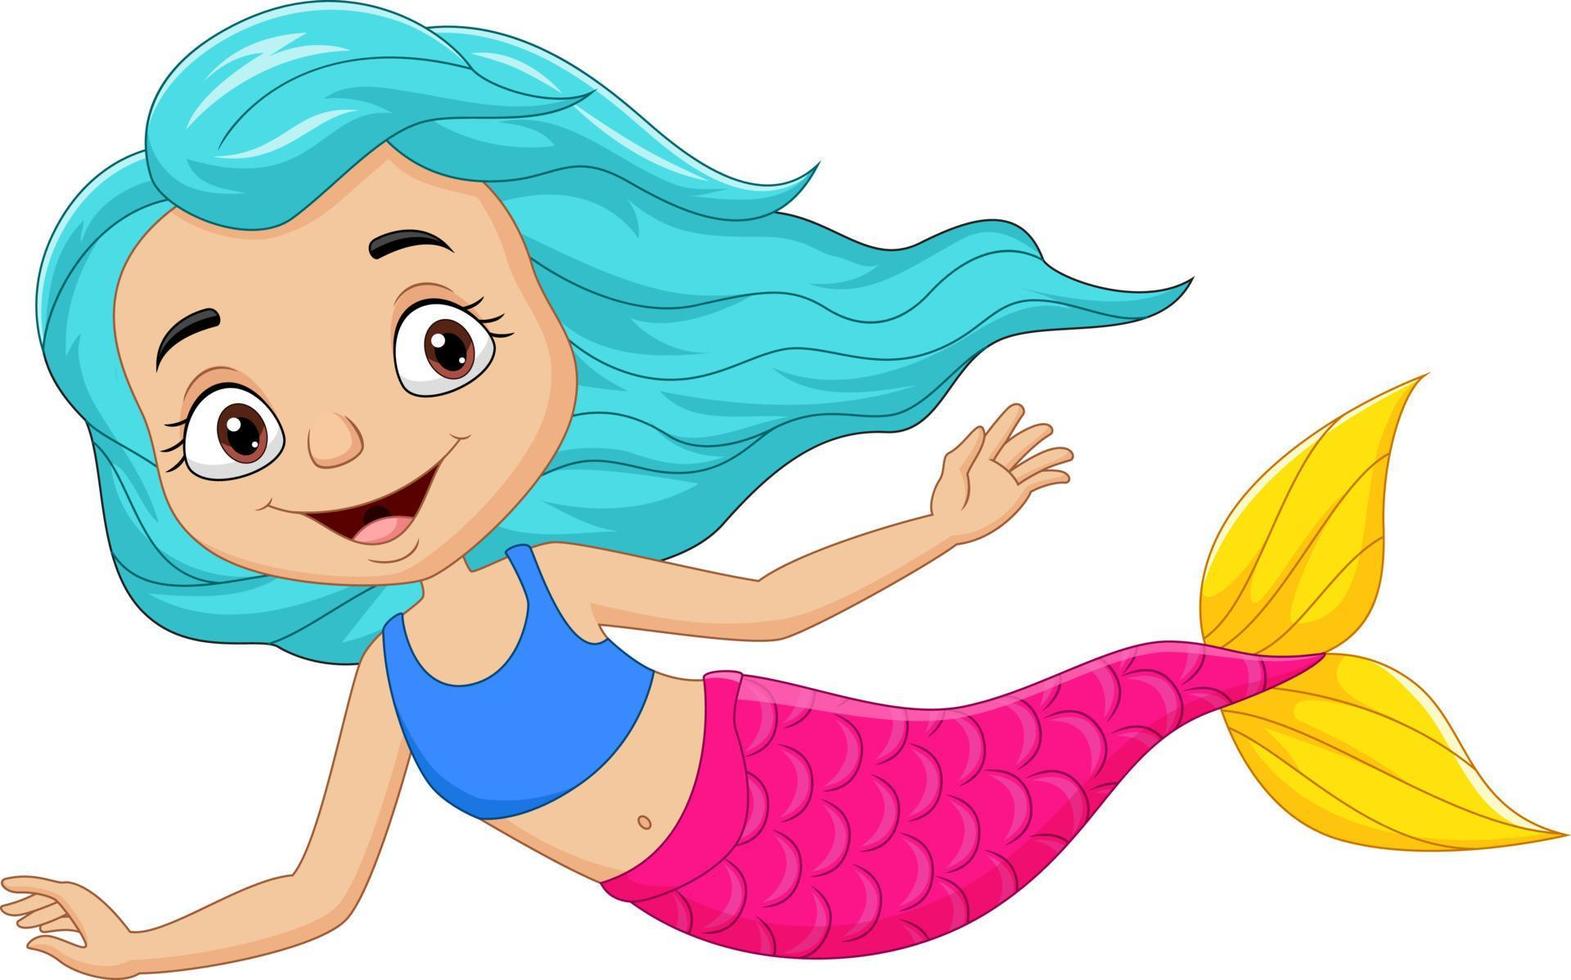 Cute little mermaid cartoon on white background vector